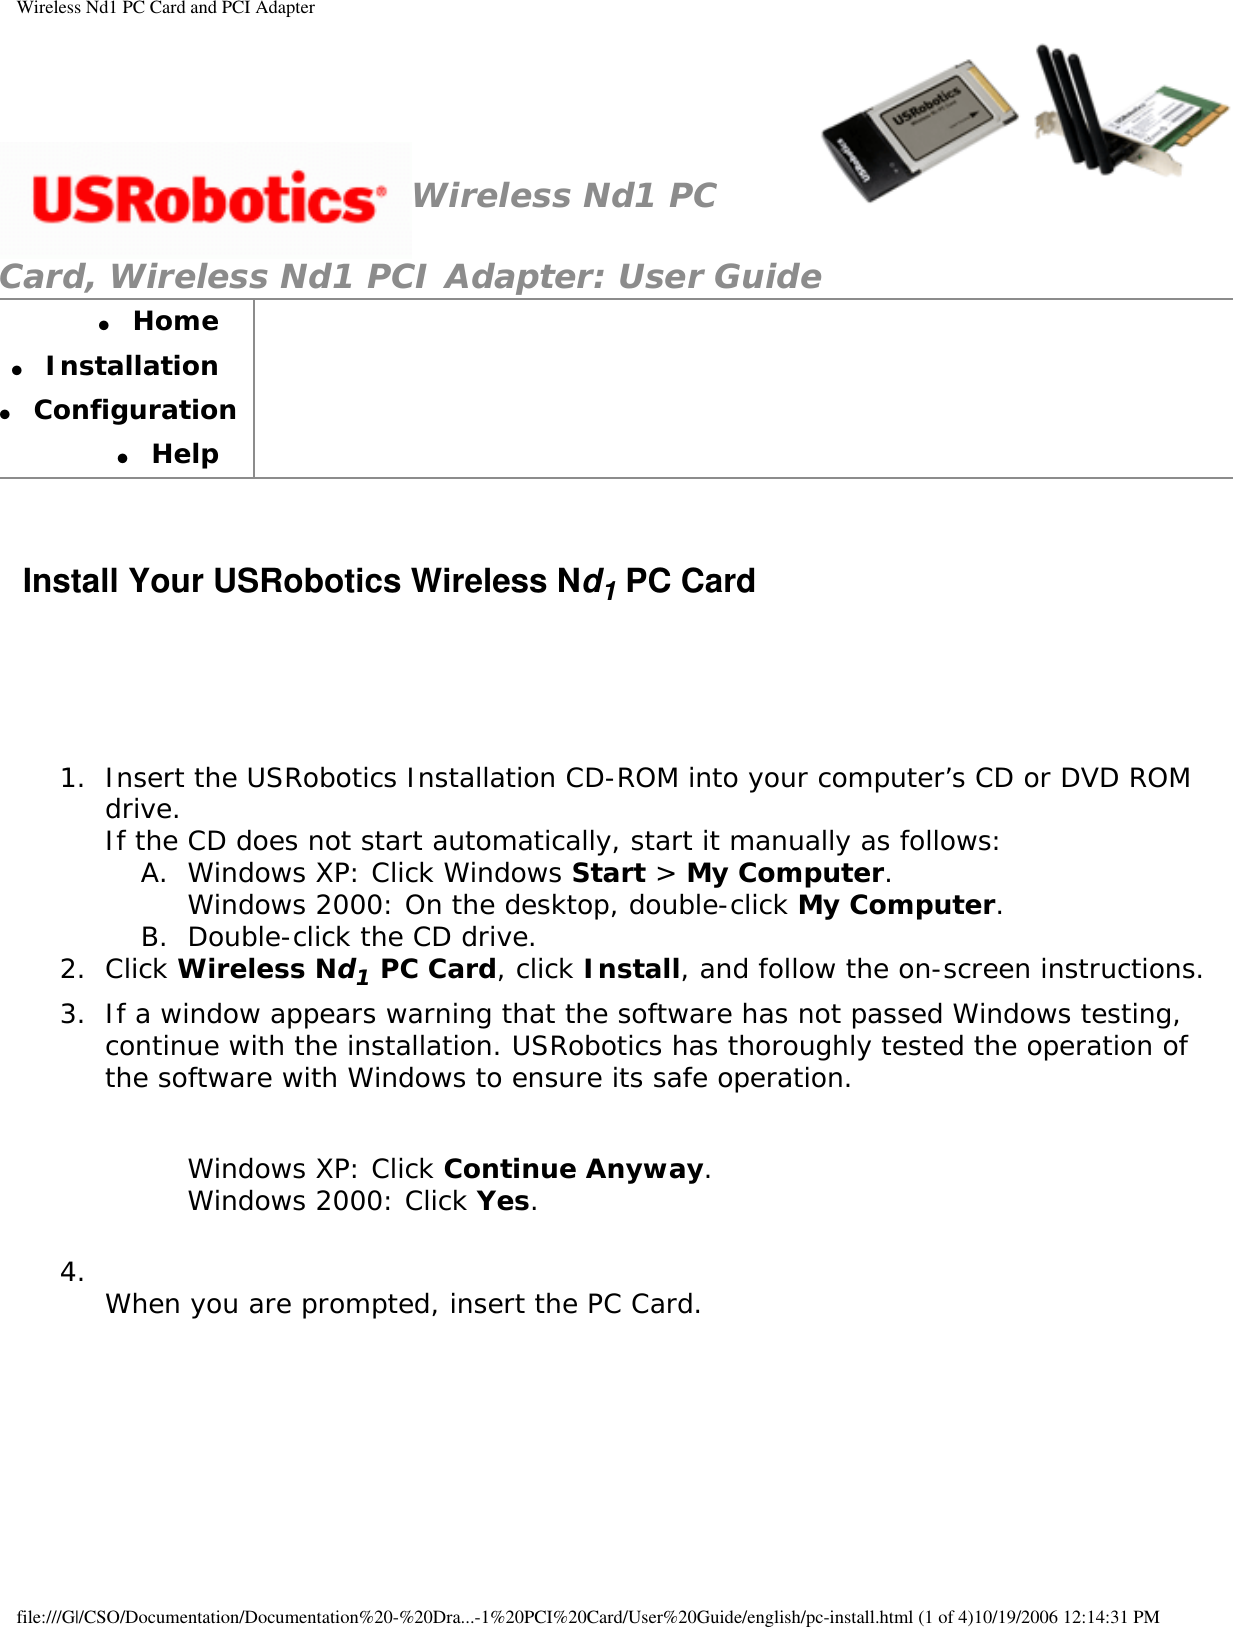 Page 9 of GemTek Technology P950622G USRobotics Wireless Nd1 PCI Adapter User Manual Wireless Nd1 PC Card and PCI Adapter